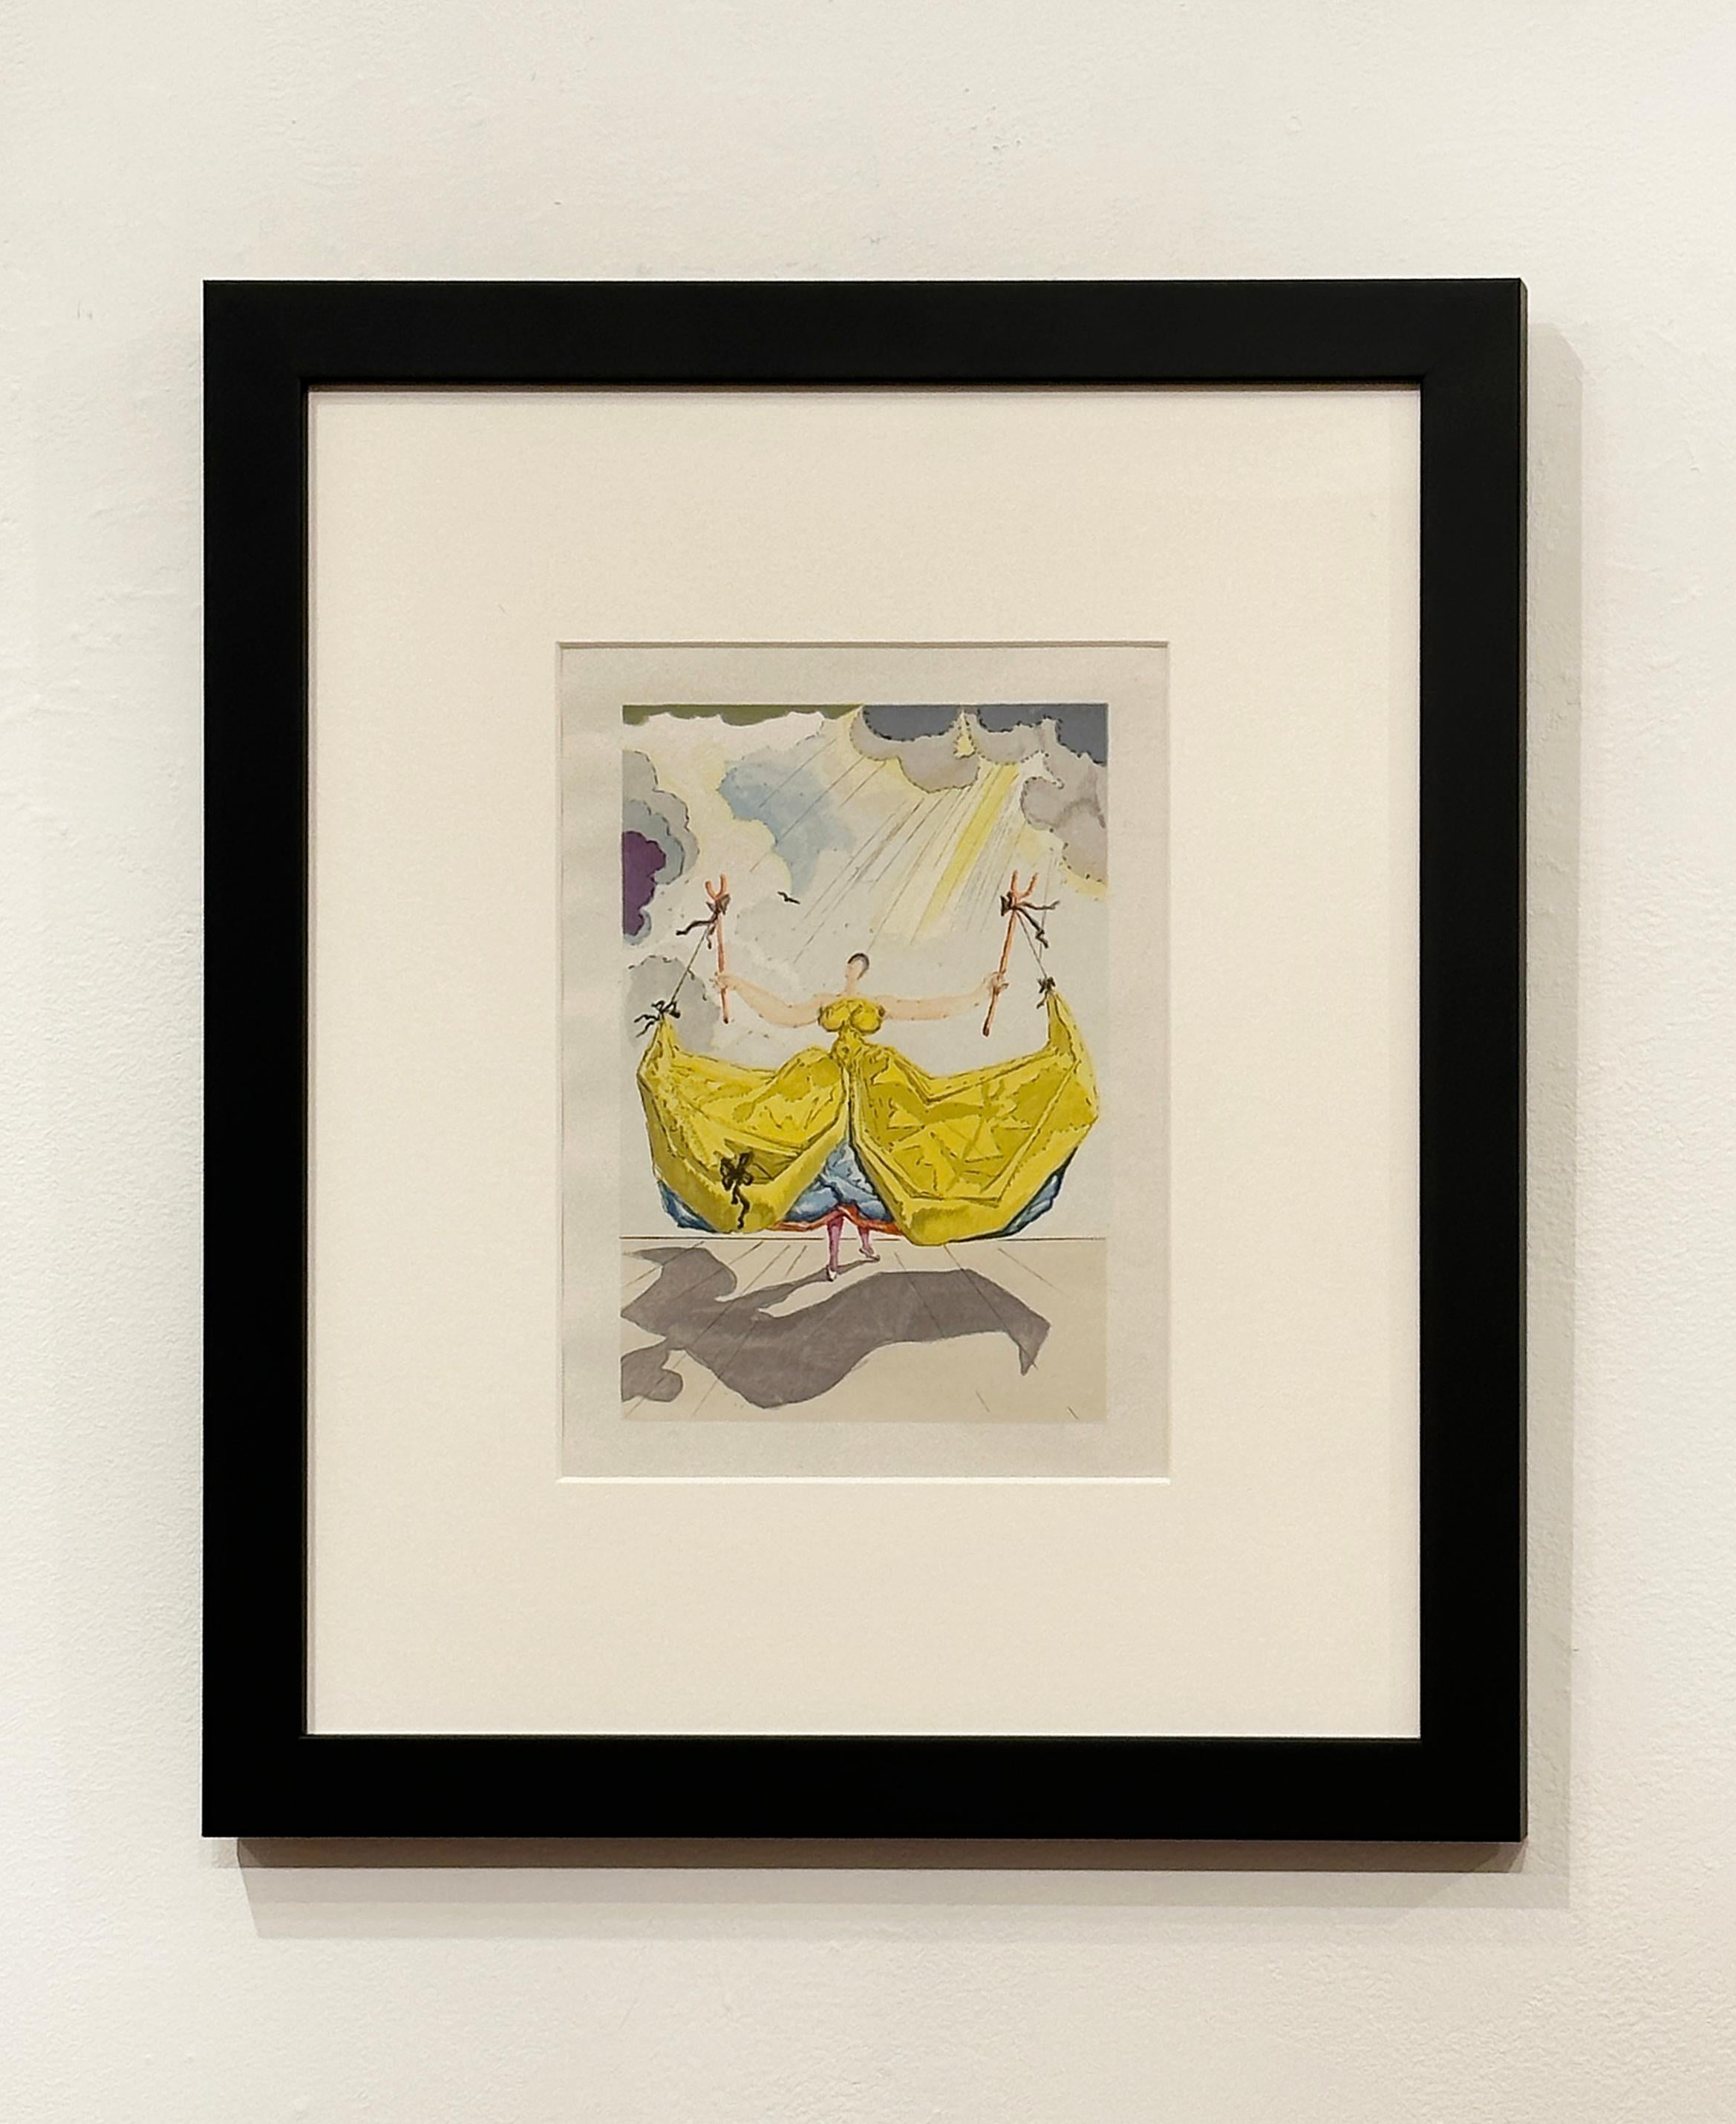 Untitled XI (Le Tricorne) - Surrealist Print by Salvador Dalí